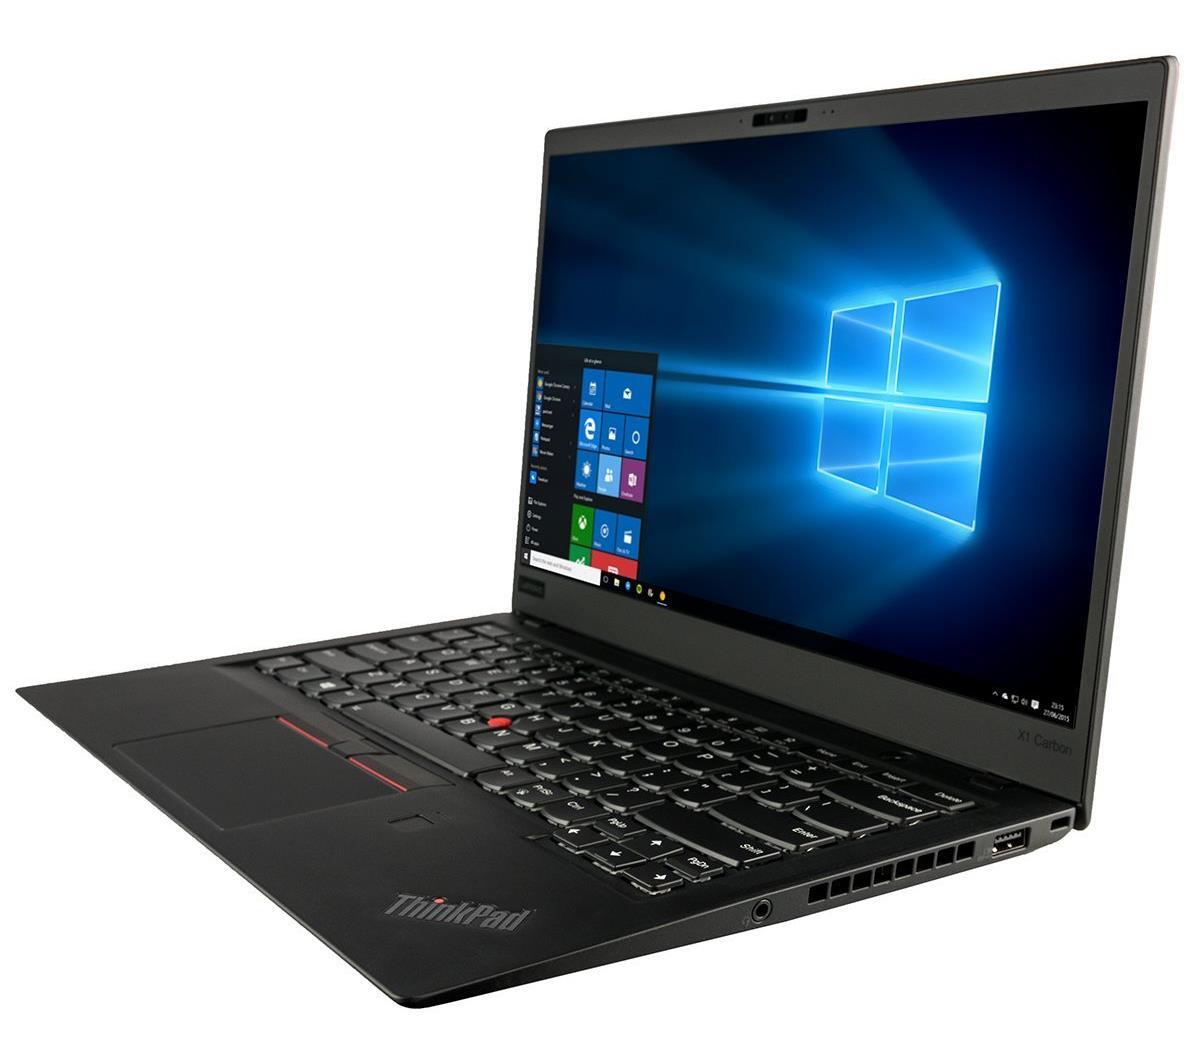 Lenovo ThinkPad X1 Carbon 4th Gen Intel i5 6300U 2.40GHz 8GB RAM 240GB SSD 14" FHD Win 10 Pro - B Grade Image 2